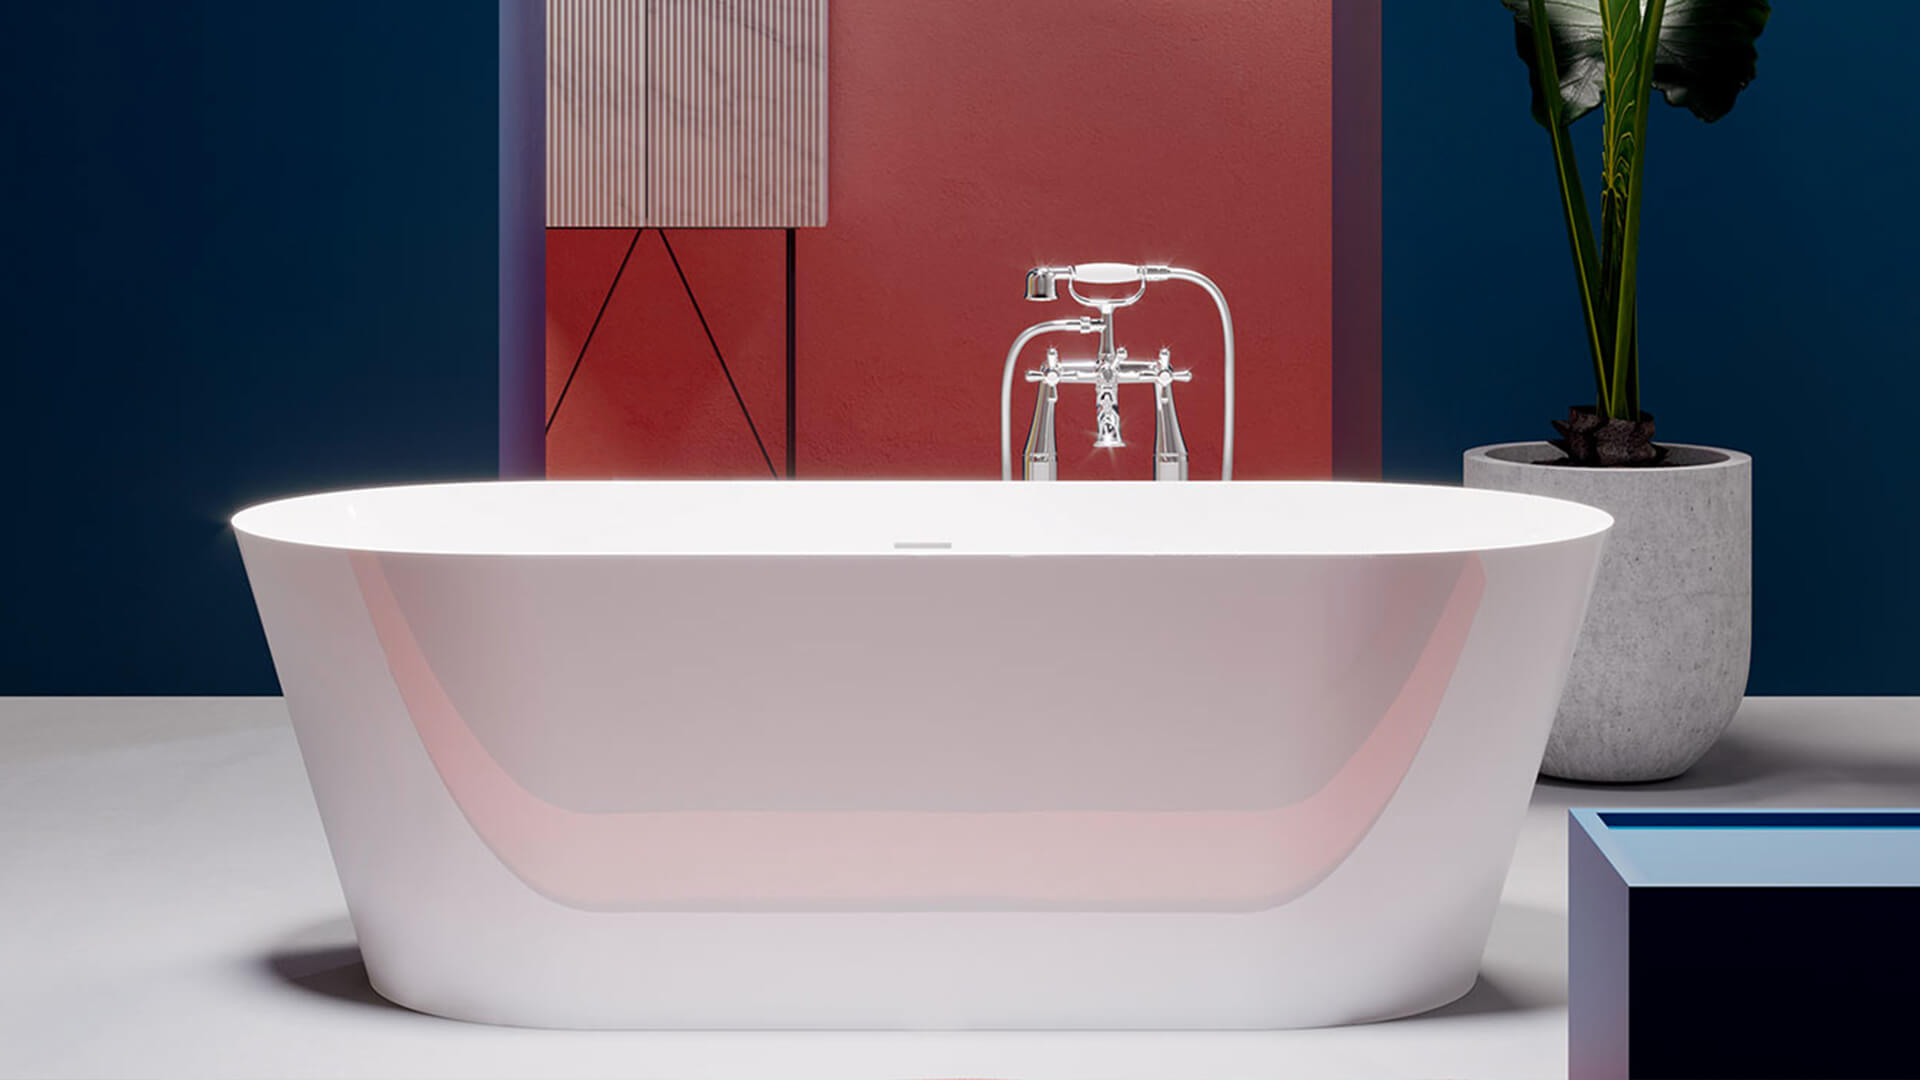 Blog IDW - Useful advice for furnishing your new bathroom